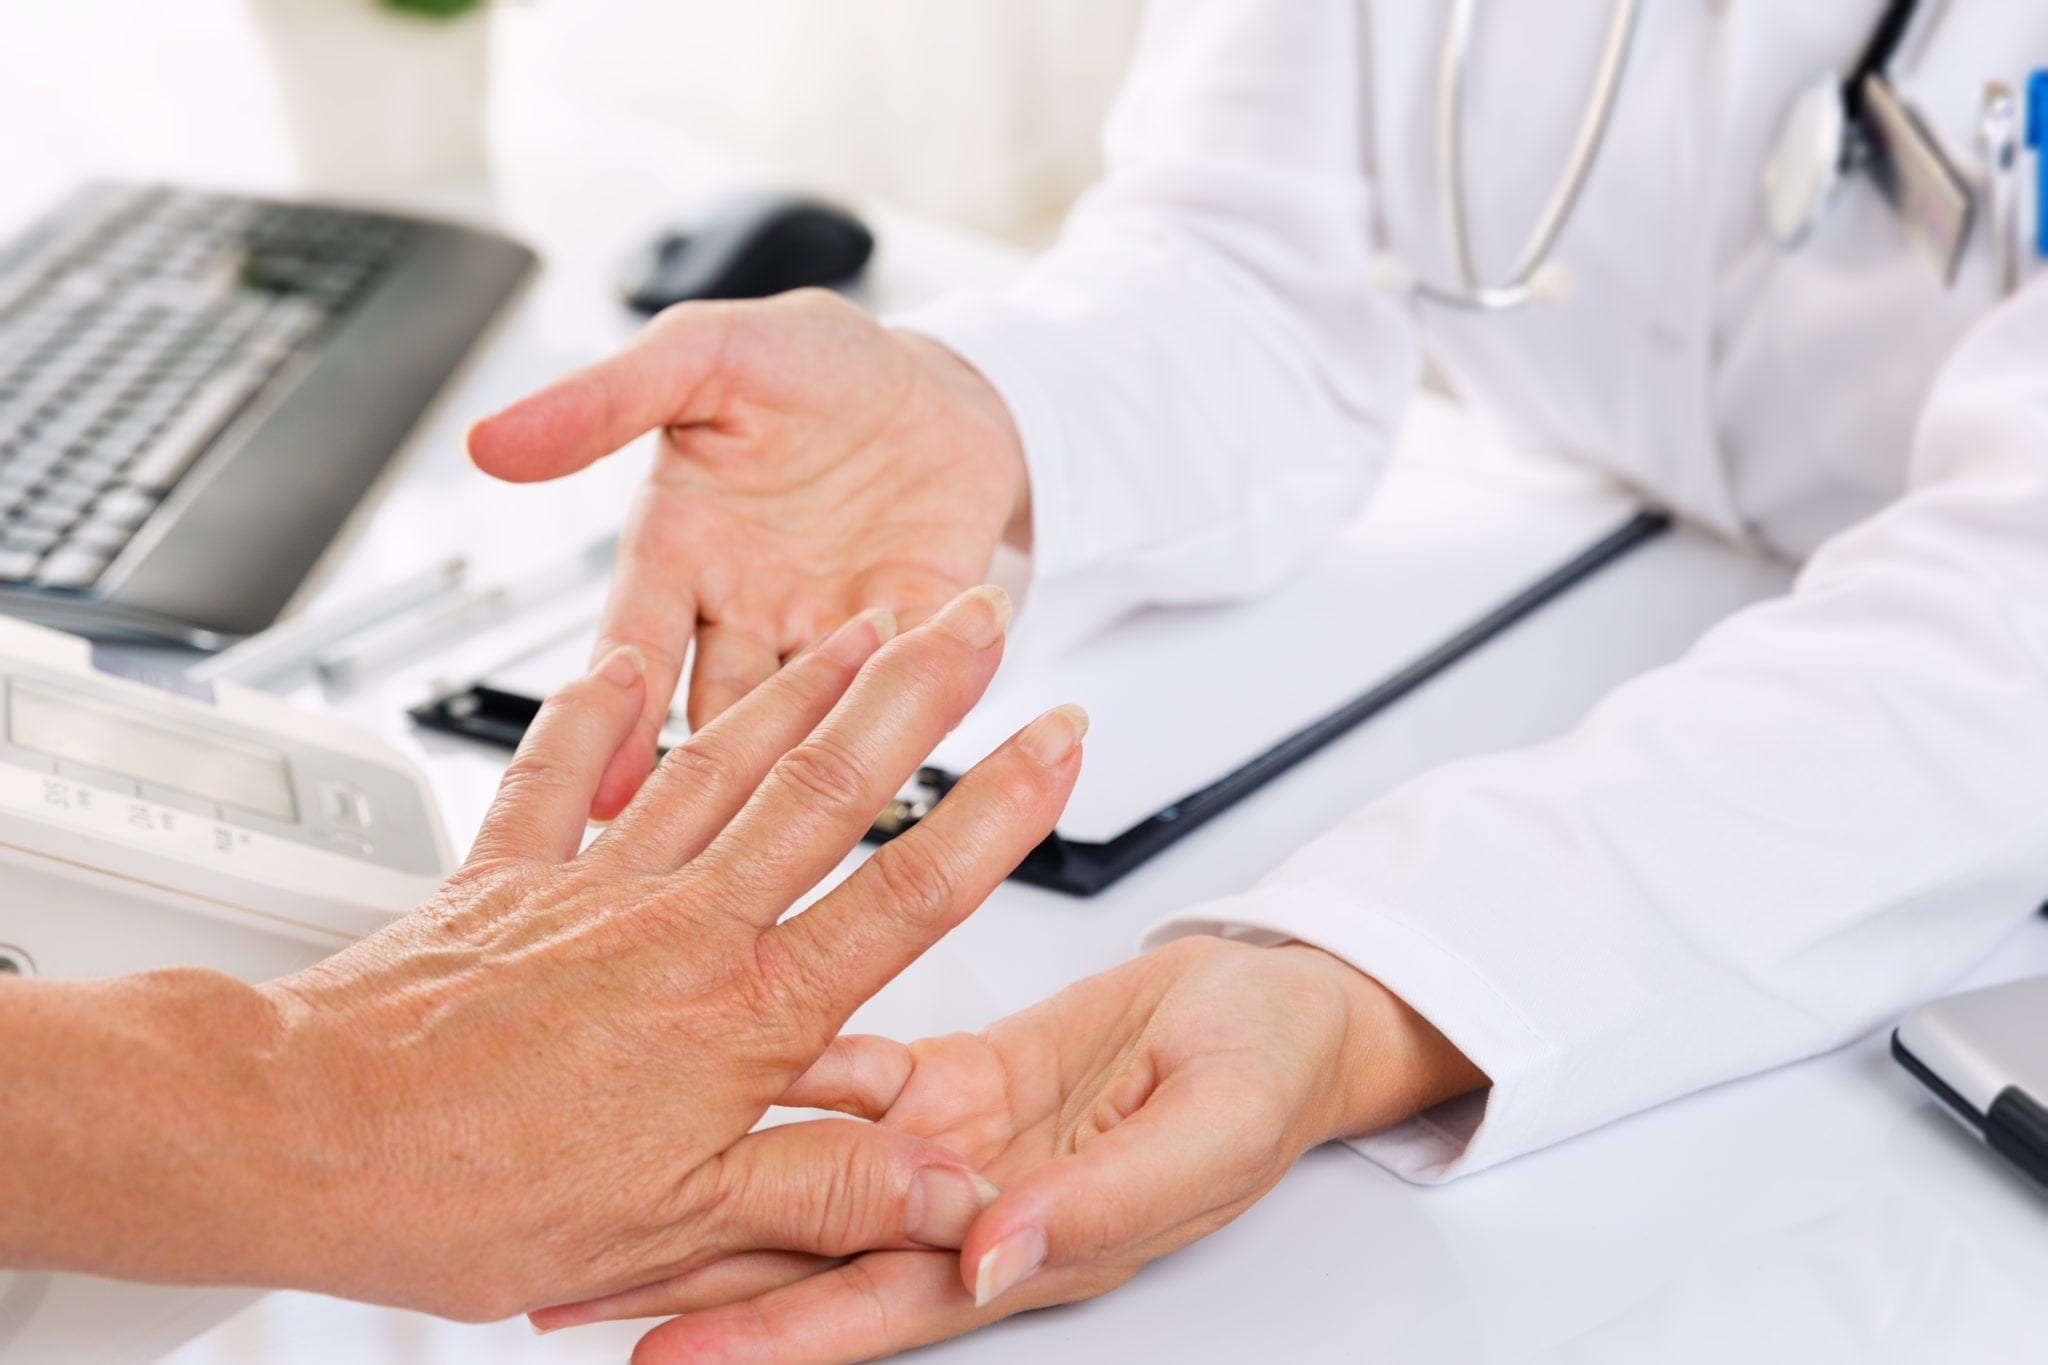 What Is Rheumatoid Arthritis? Symptoms And Treatment